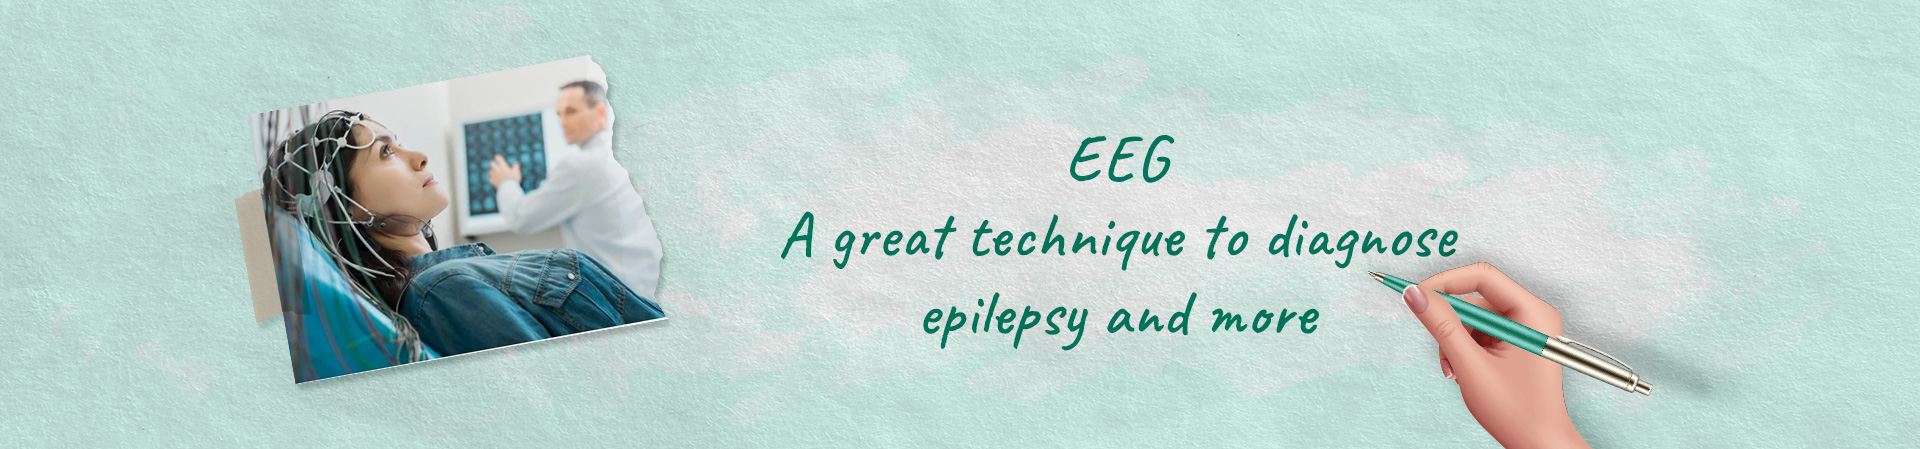 EEG Test in Accuhealth